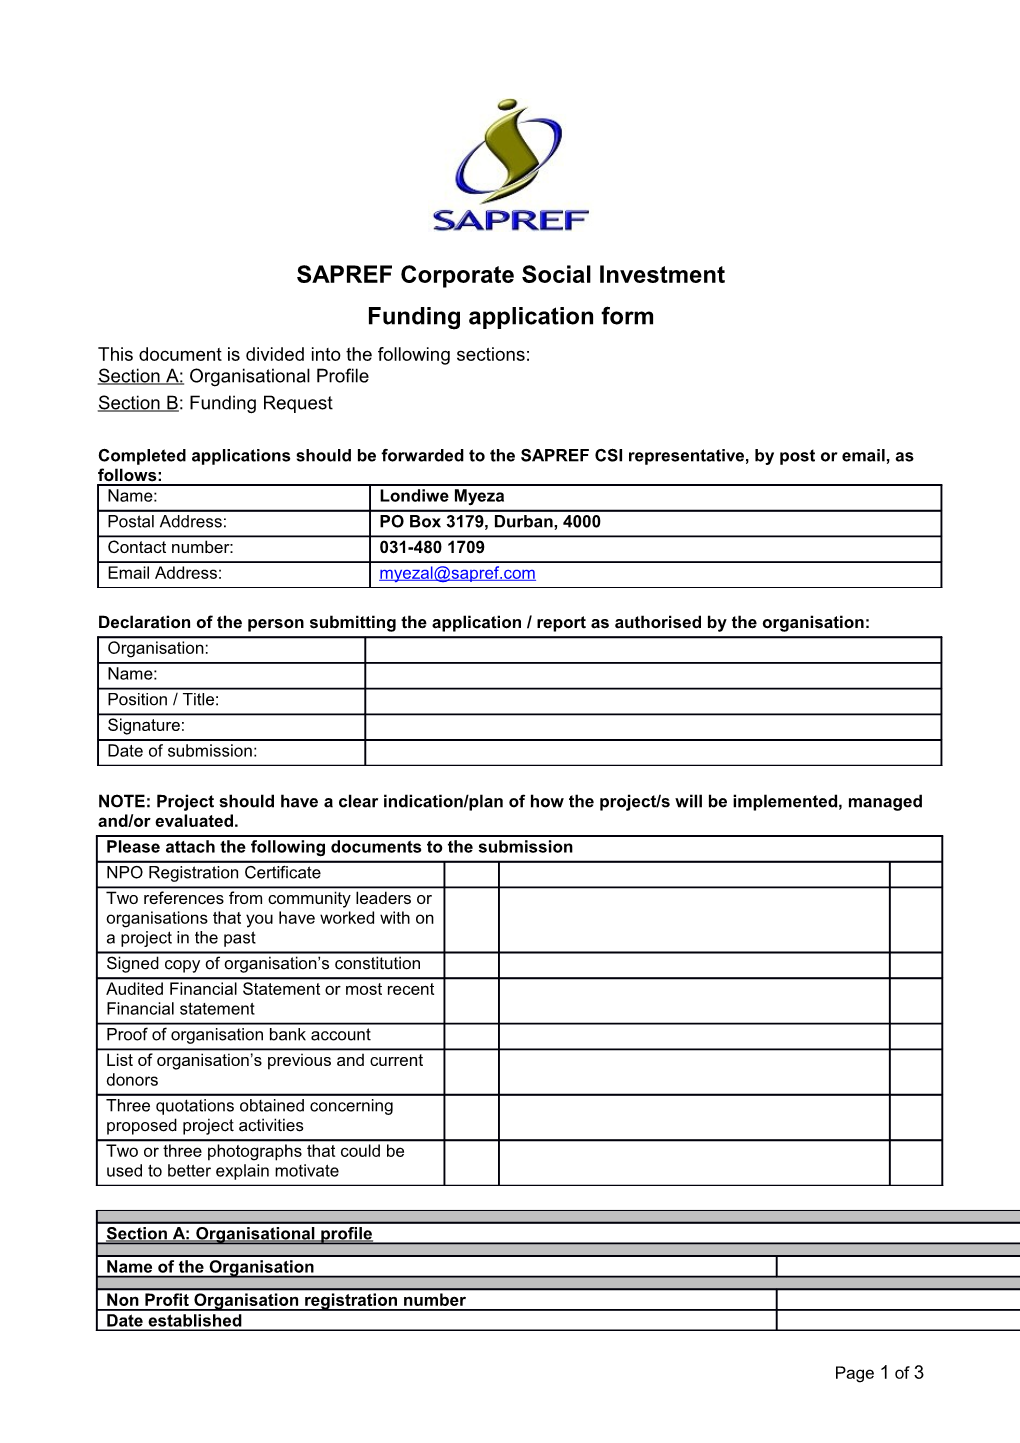 SAPREF Corporate Social Investment